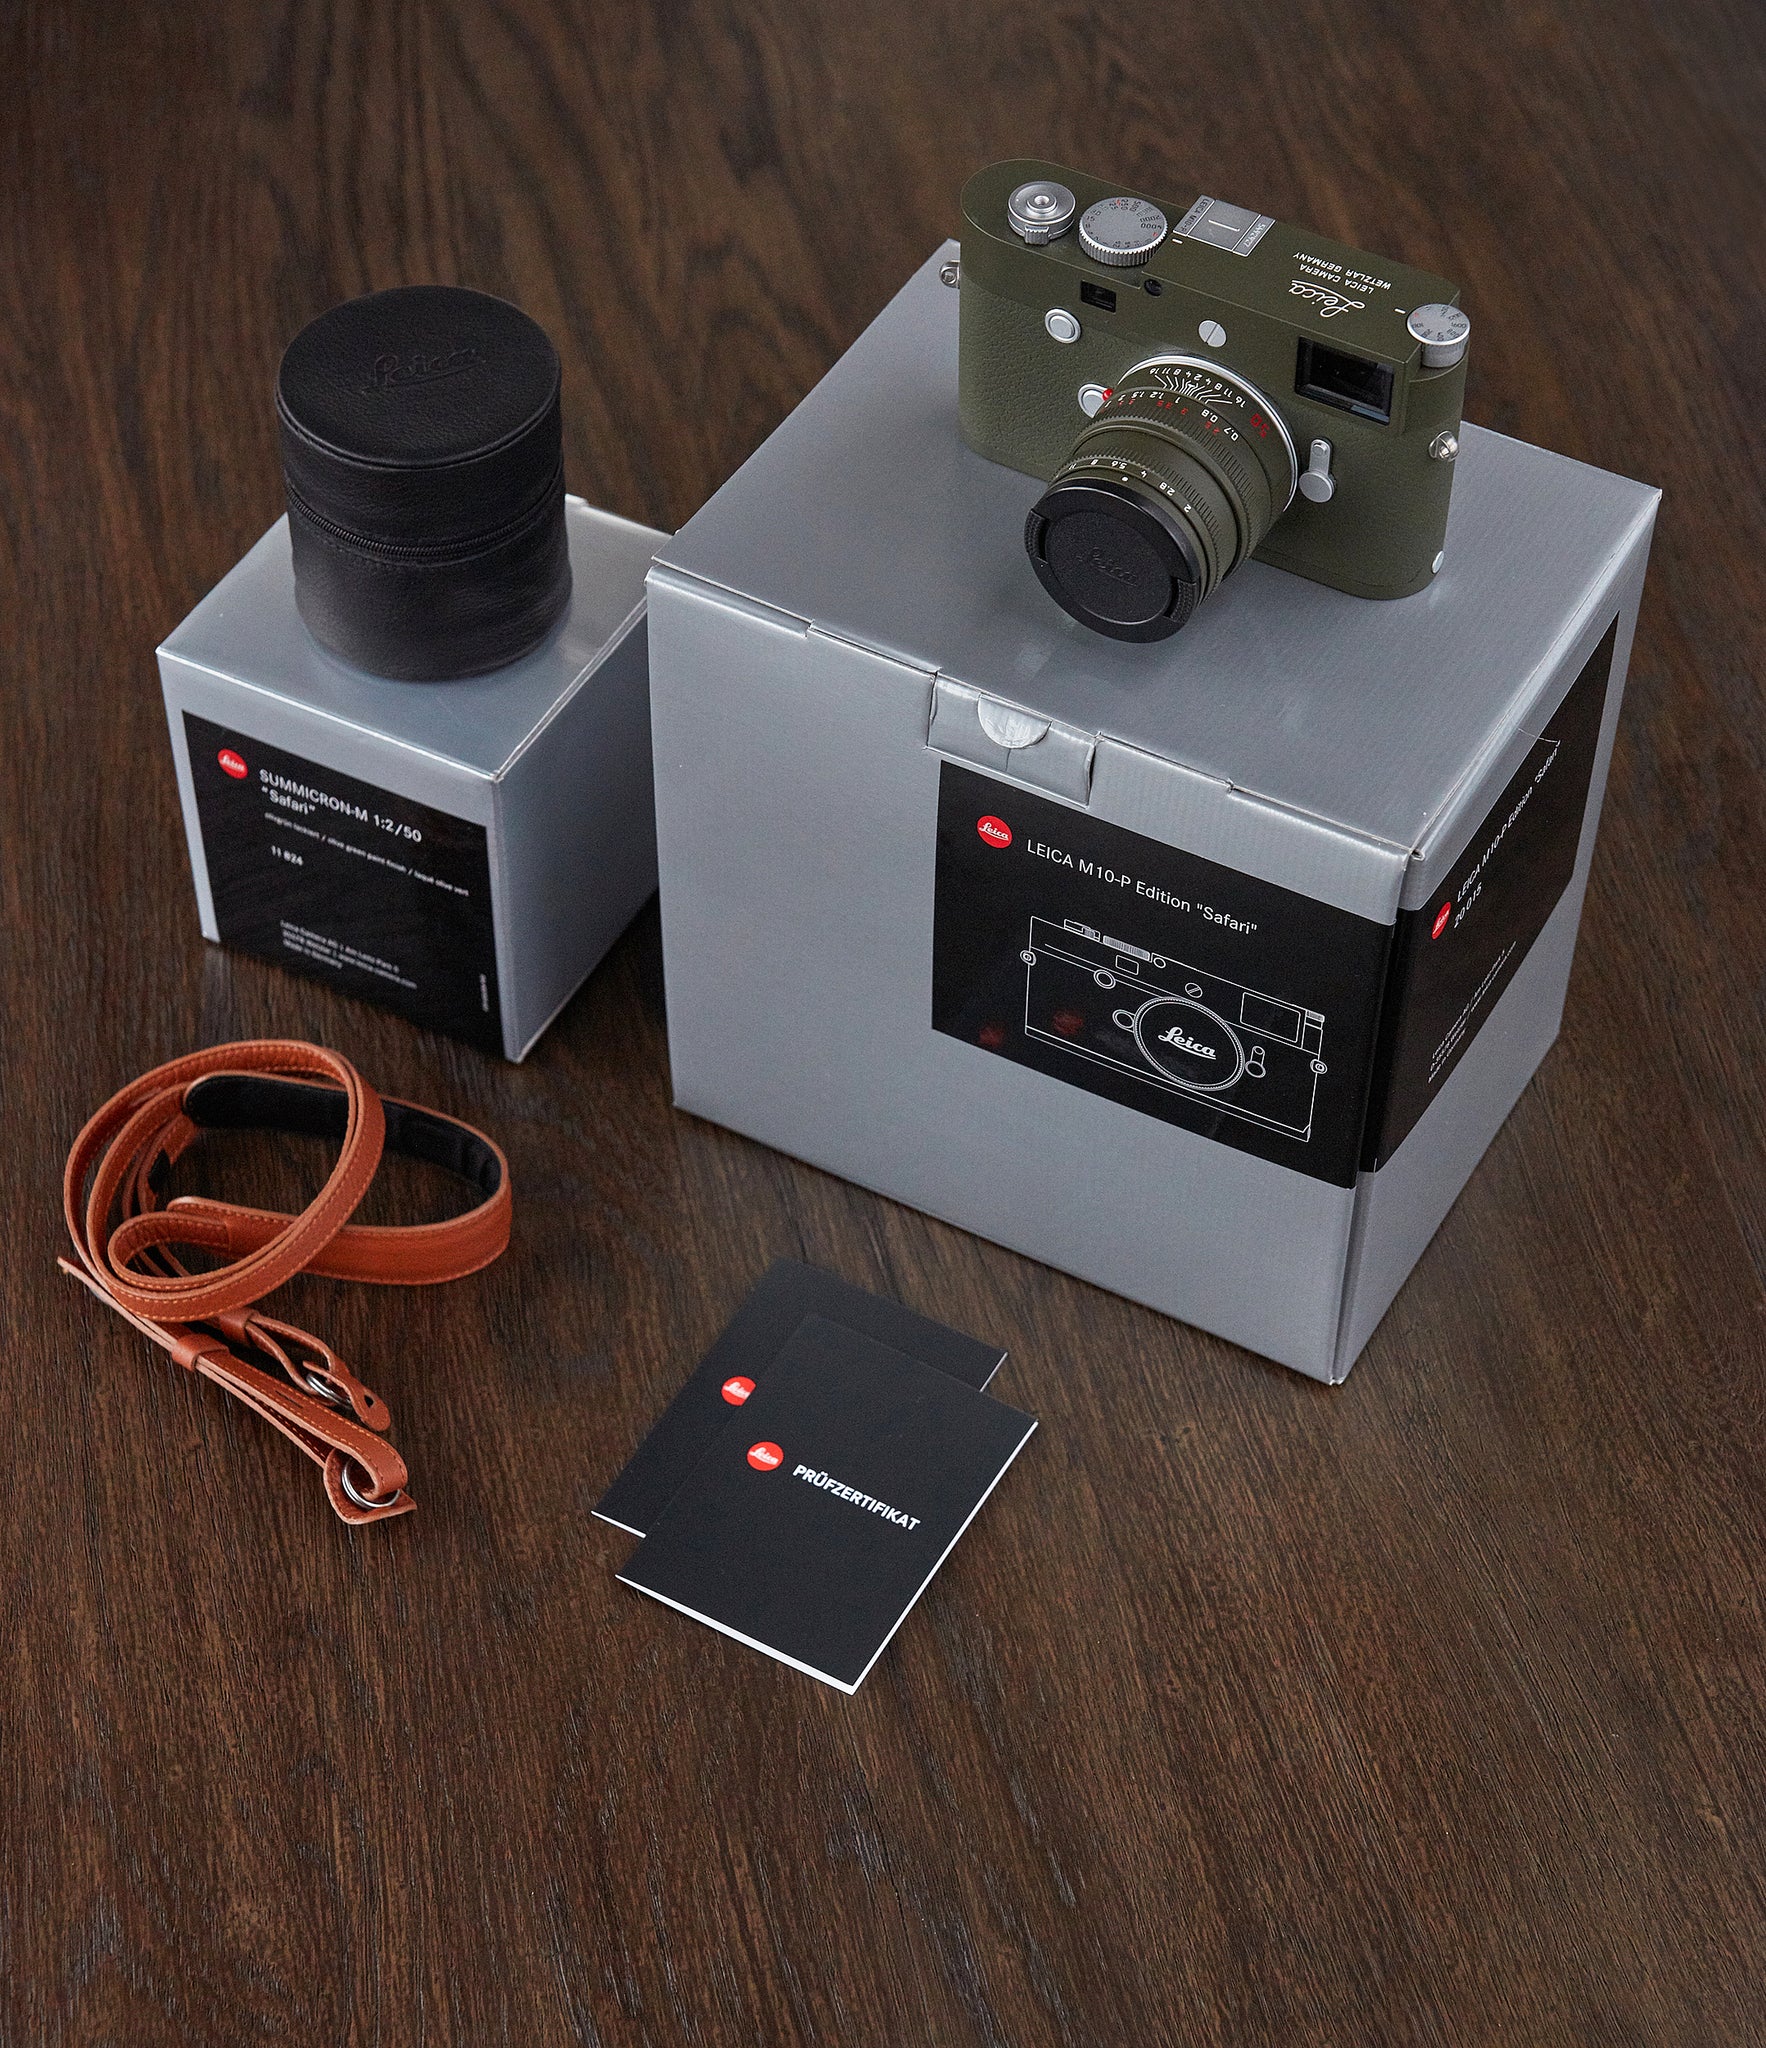 Leica M10-P Edition Safari